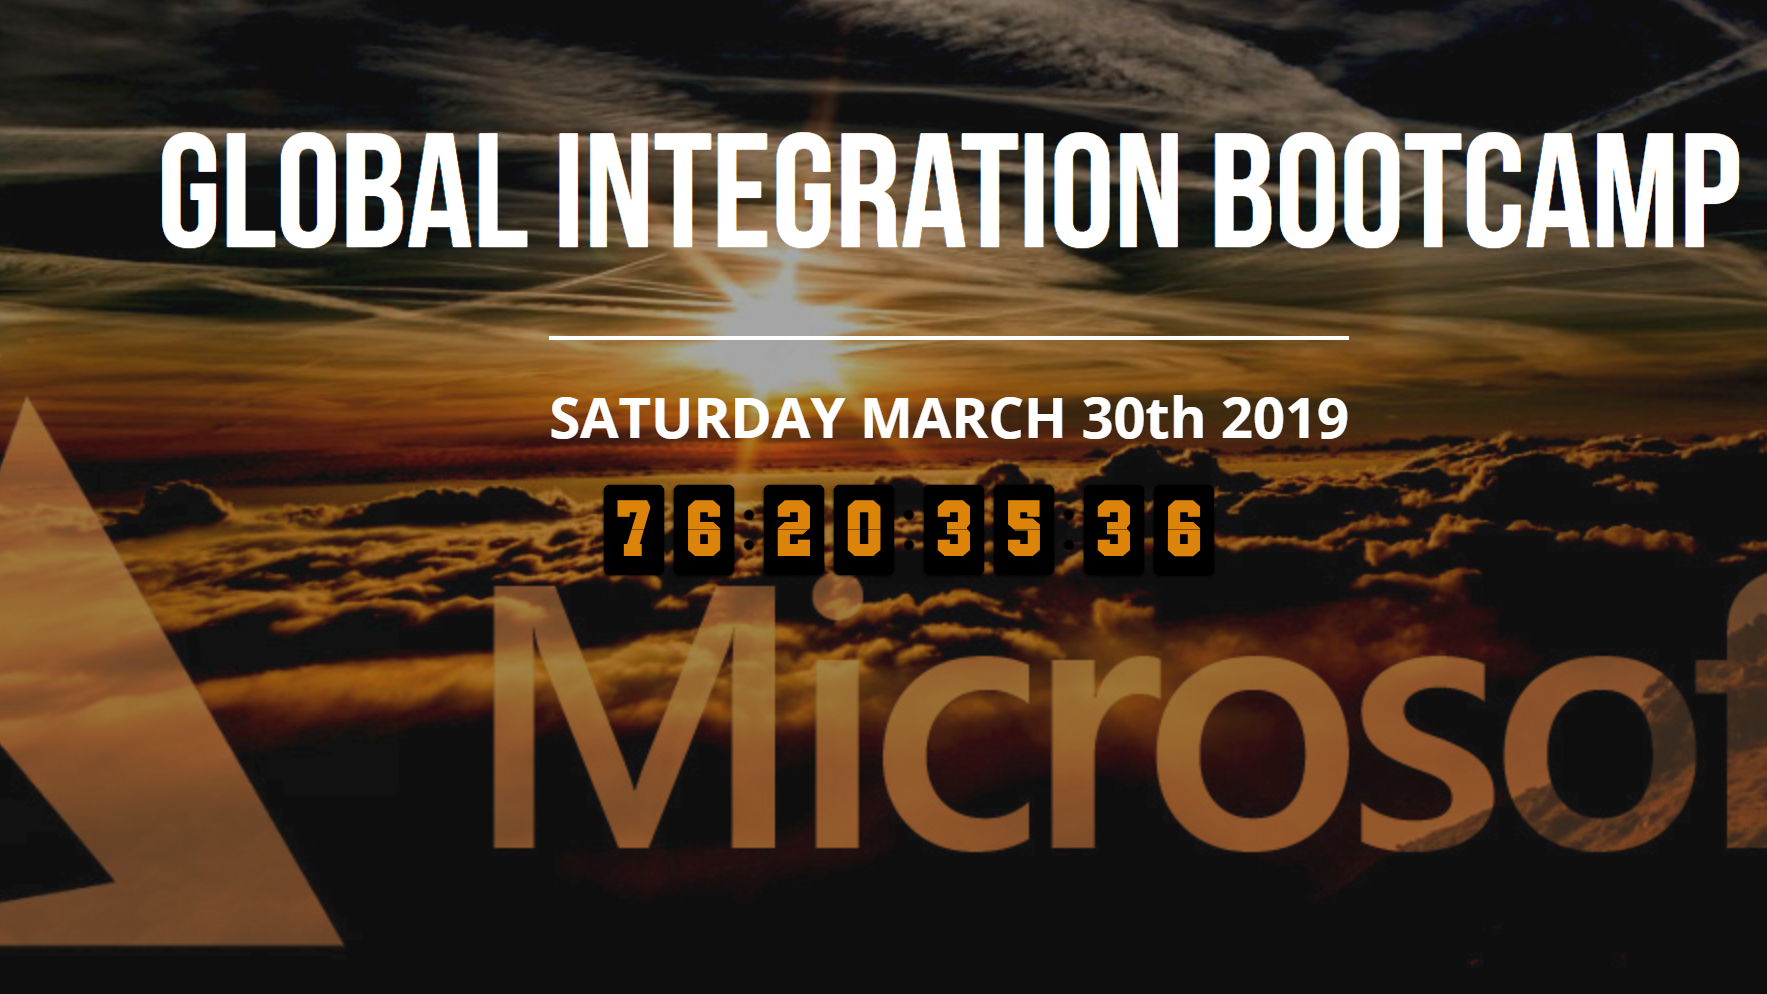 [Eventos] Global Integration Bootcamp 2019 Barcelona